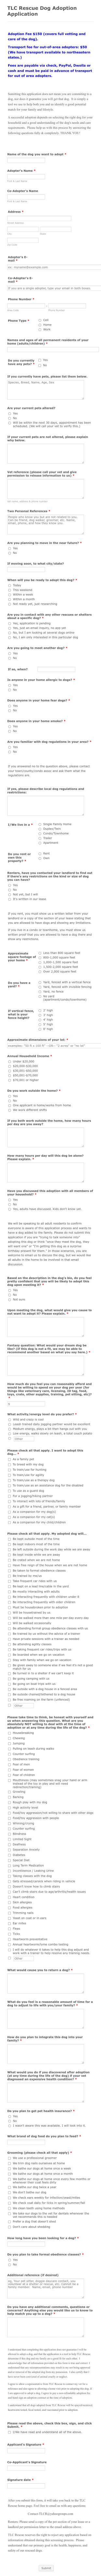 Dog Adoption Application Form Template